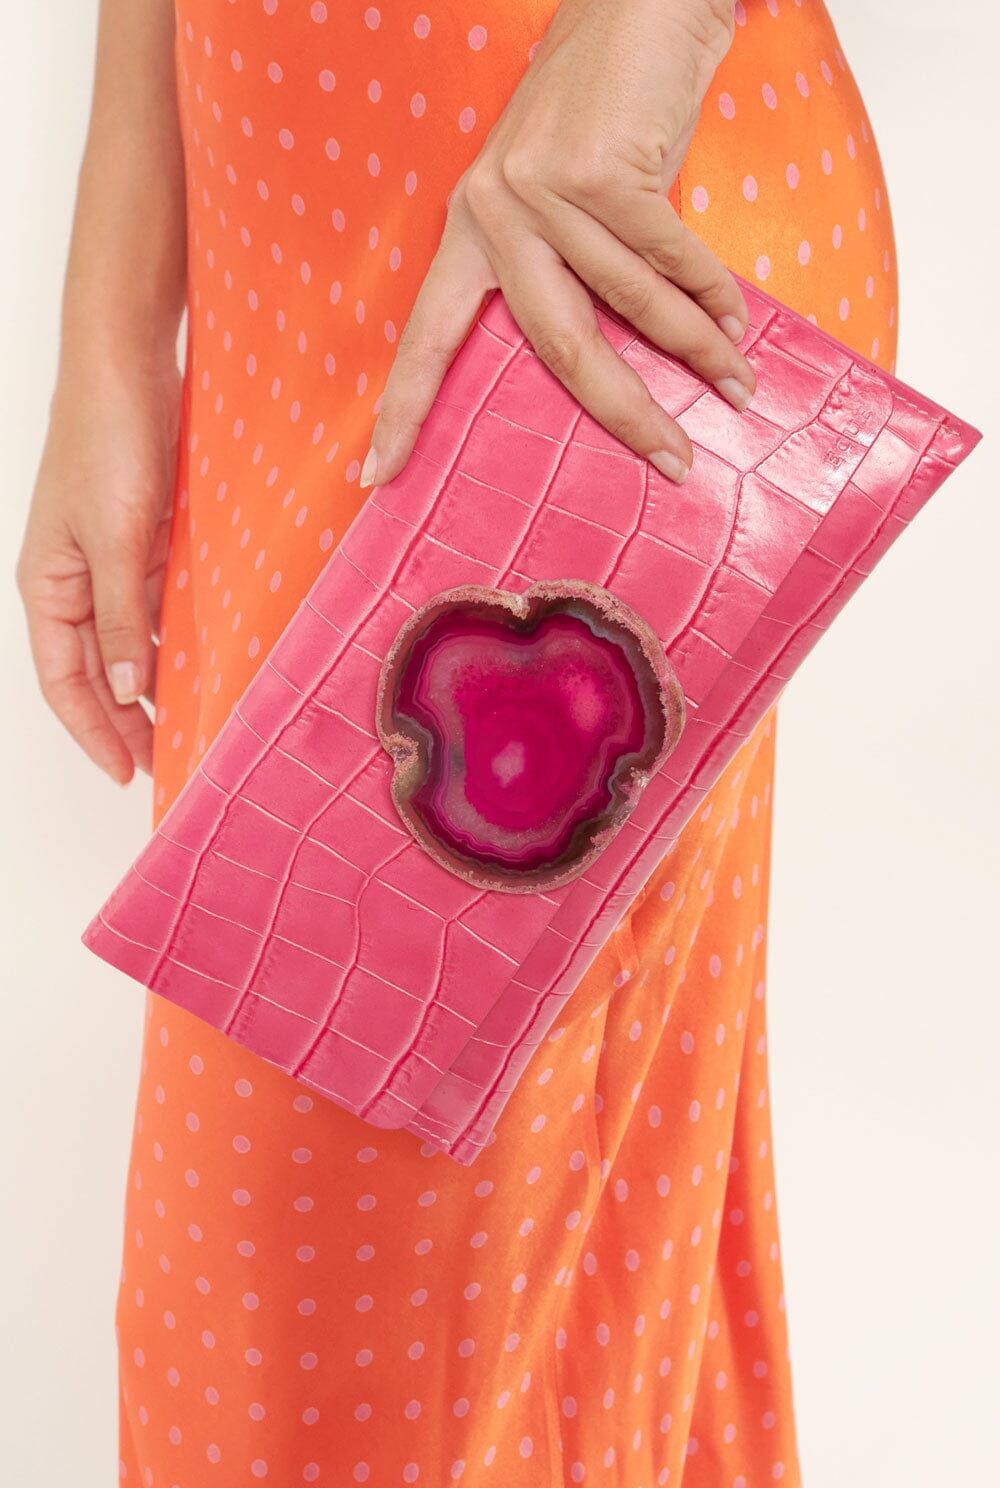 Premium Maxi Clutch - Coco Rosa Agata Rosa Hand bags Ecue 